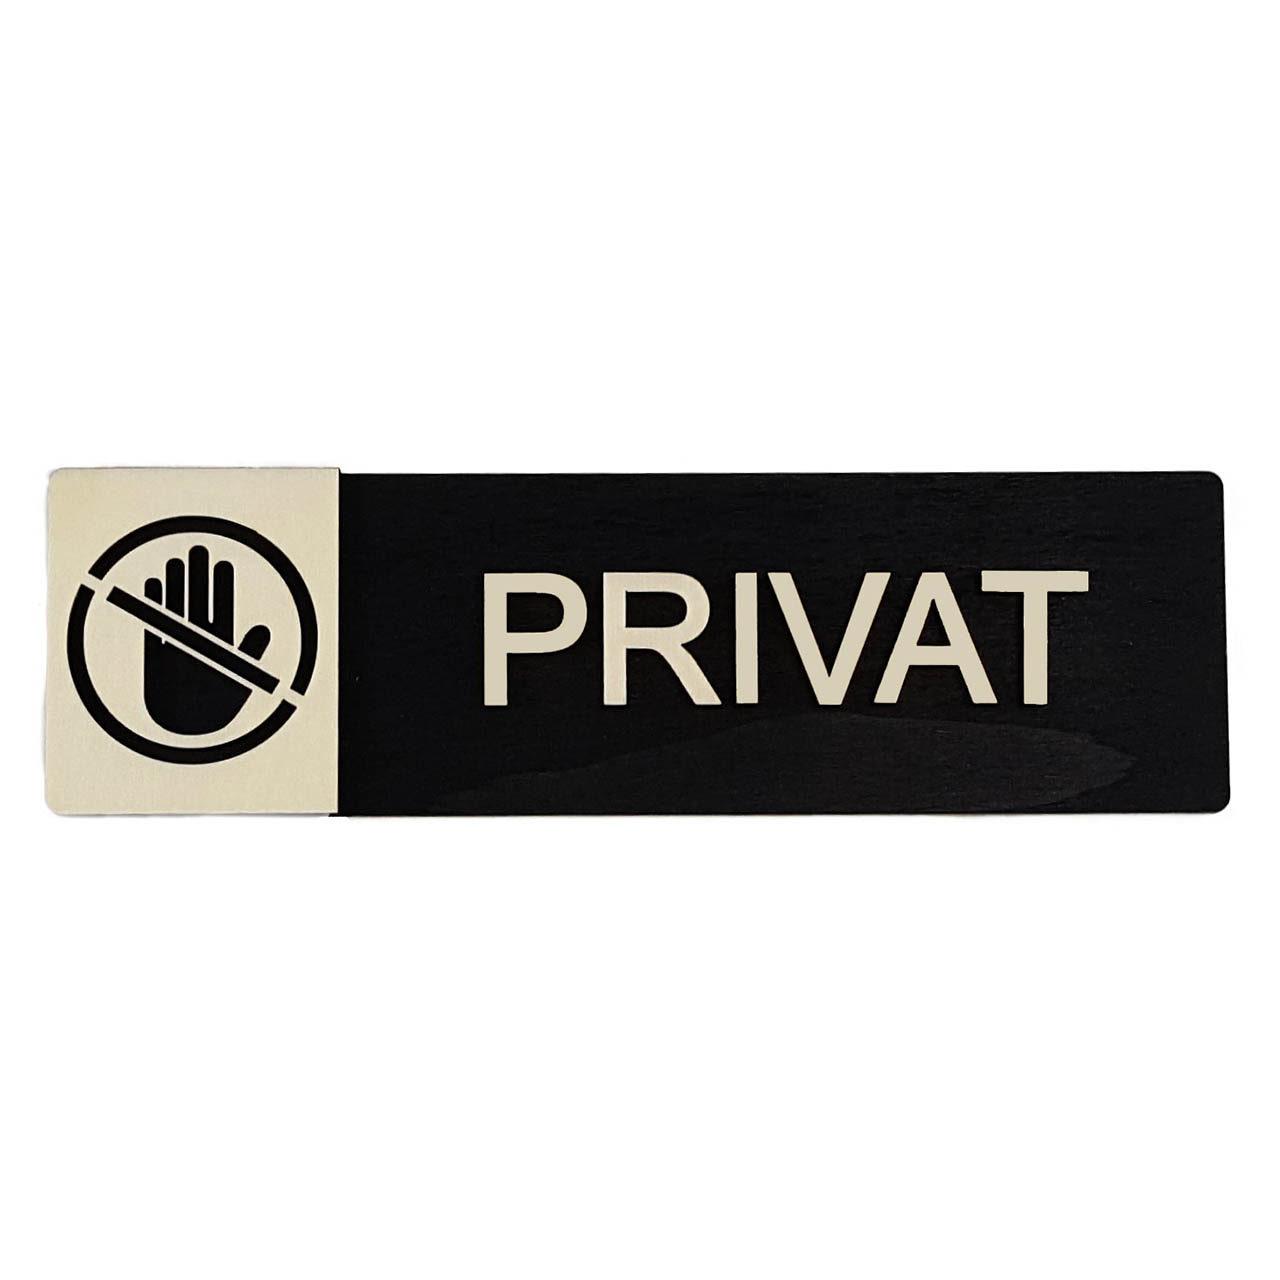 Holz-Türschild "Privat"